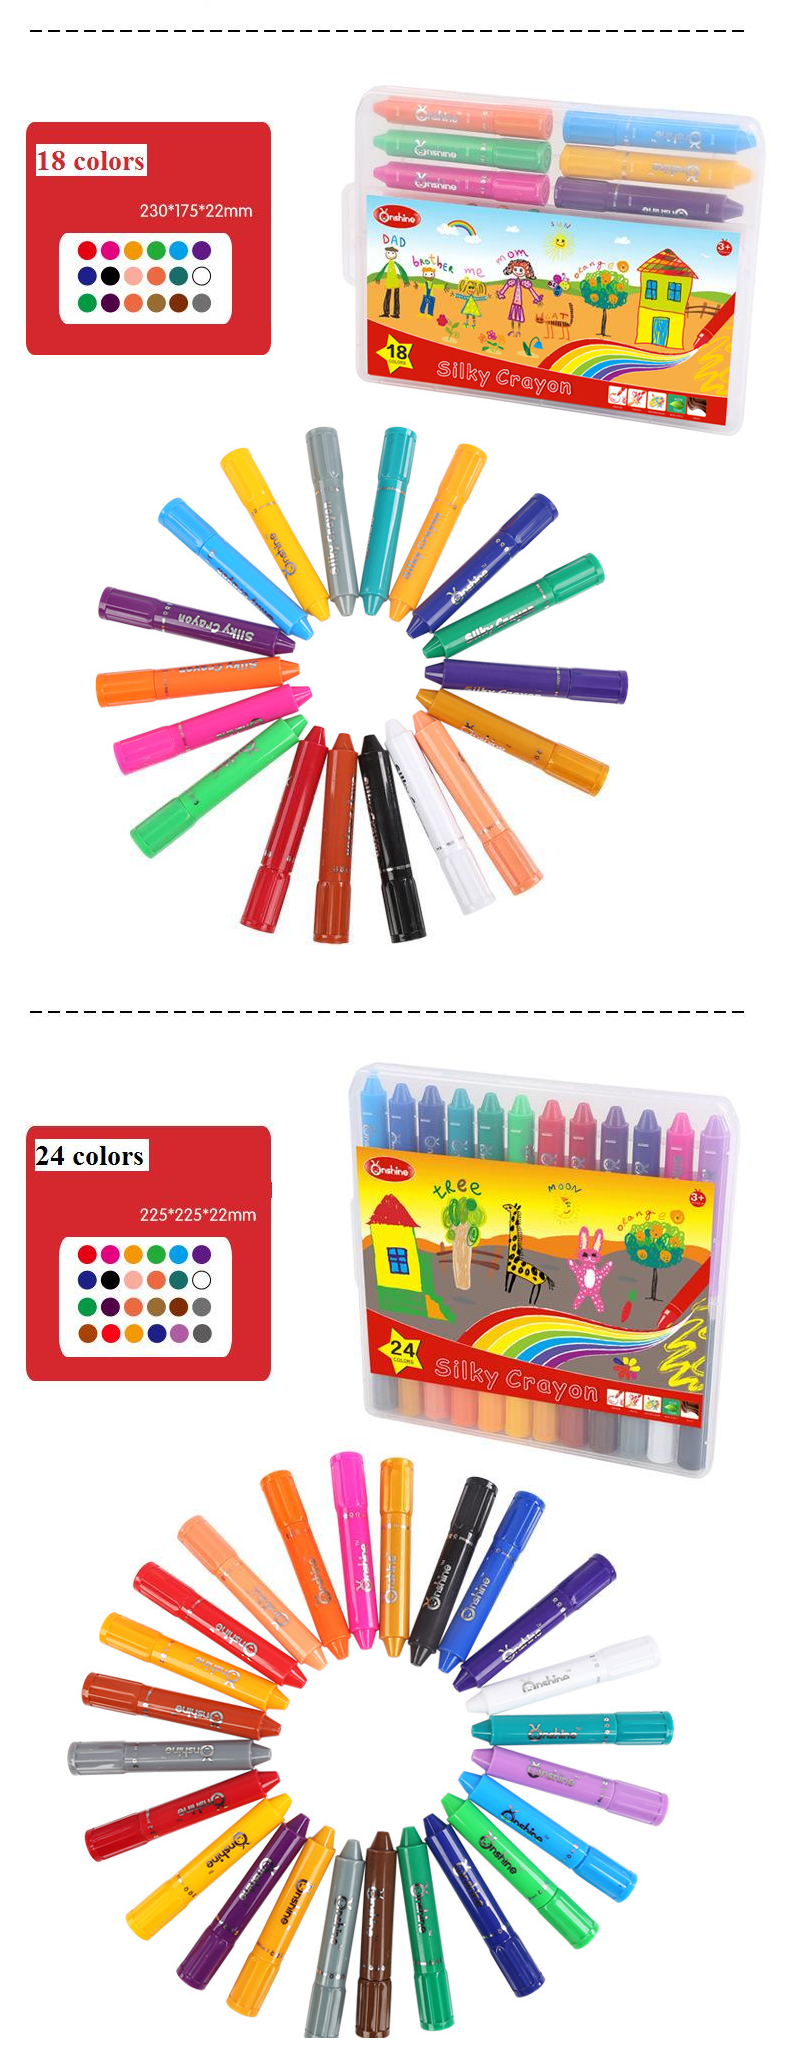 Onshine-18-Pcs-Crayon-Pens-Watercolor-Non-Toxic-Washable-Crayons-Art-Painting-Tools-Office-School-Su-1544858-4